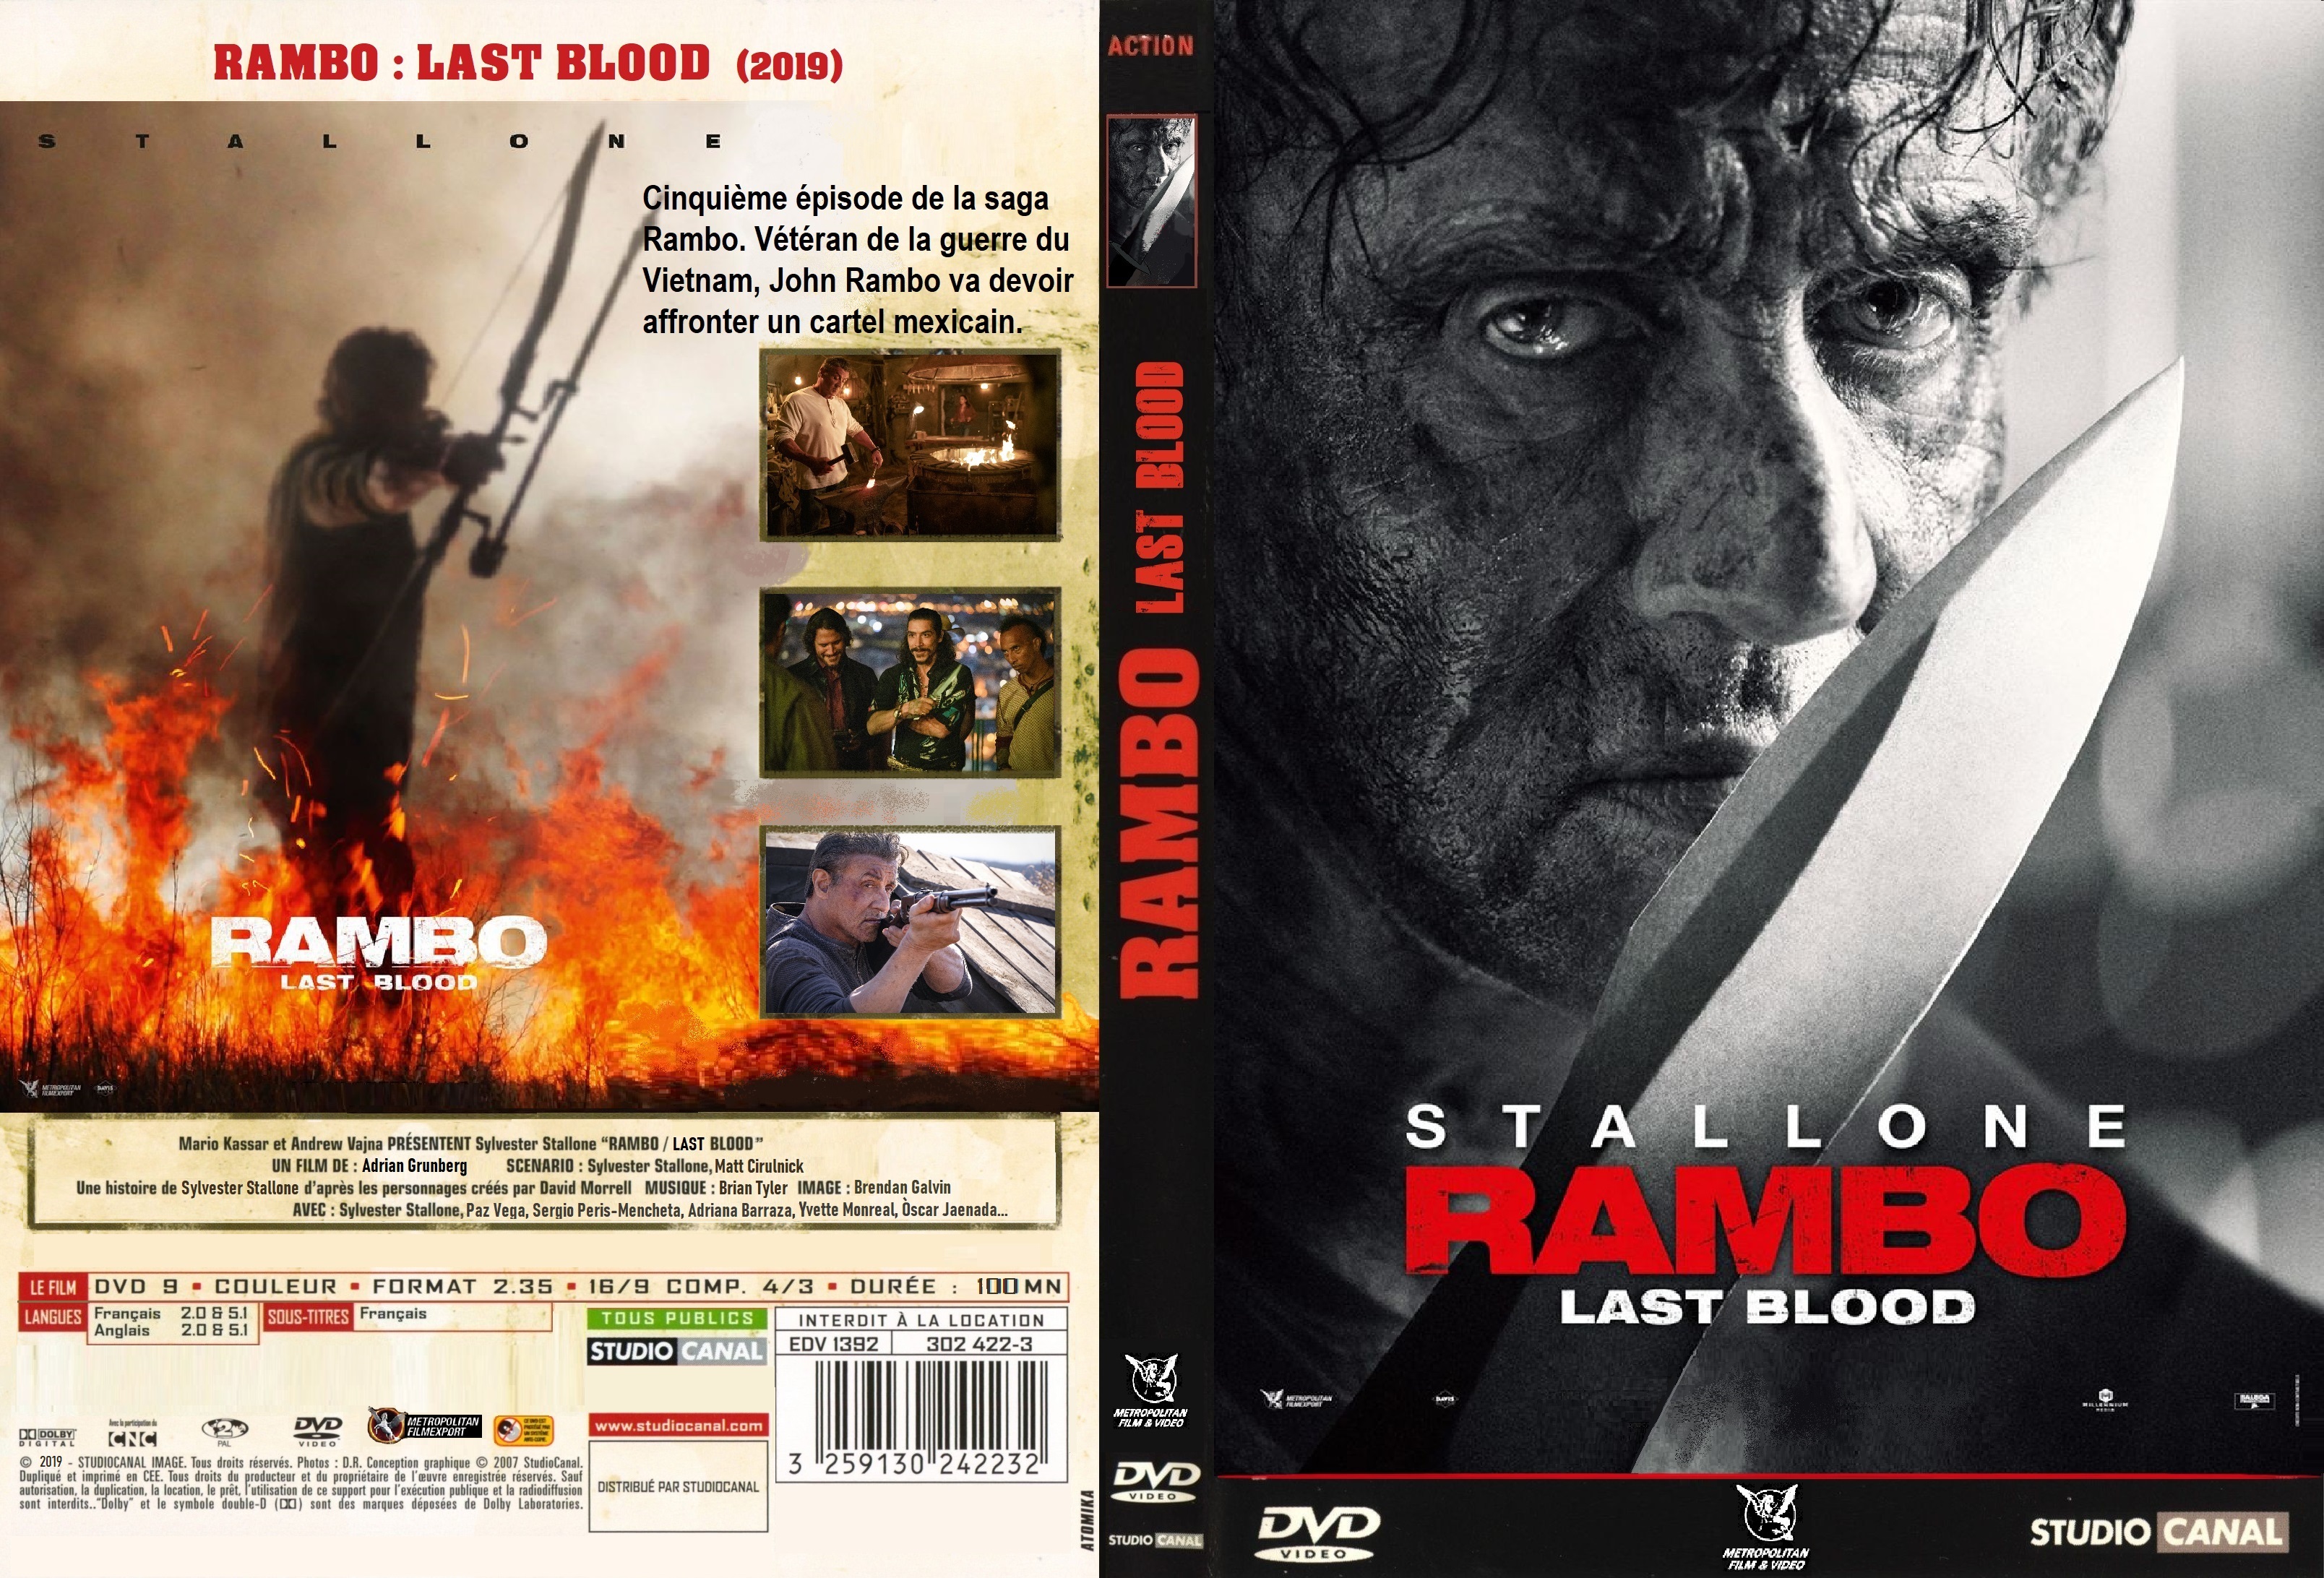 Jaquette DVD Rambo Last Blood custom